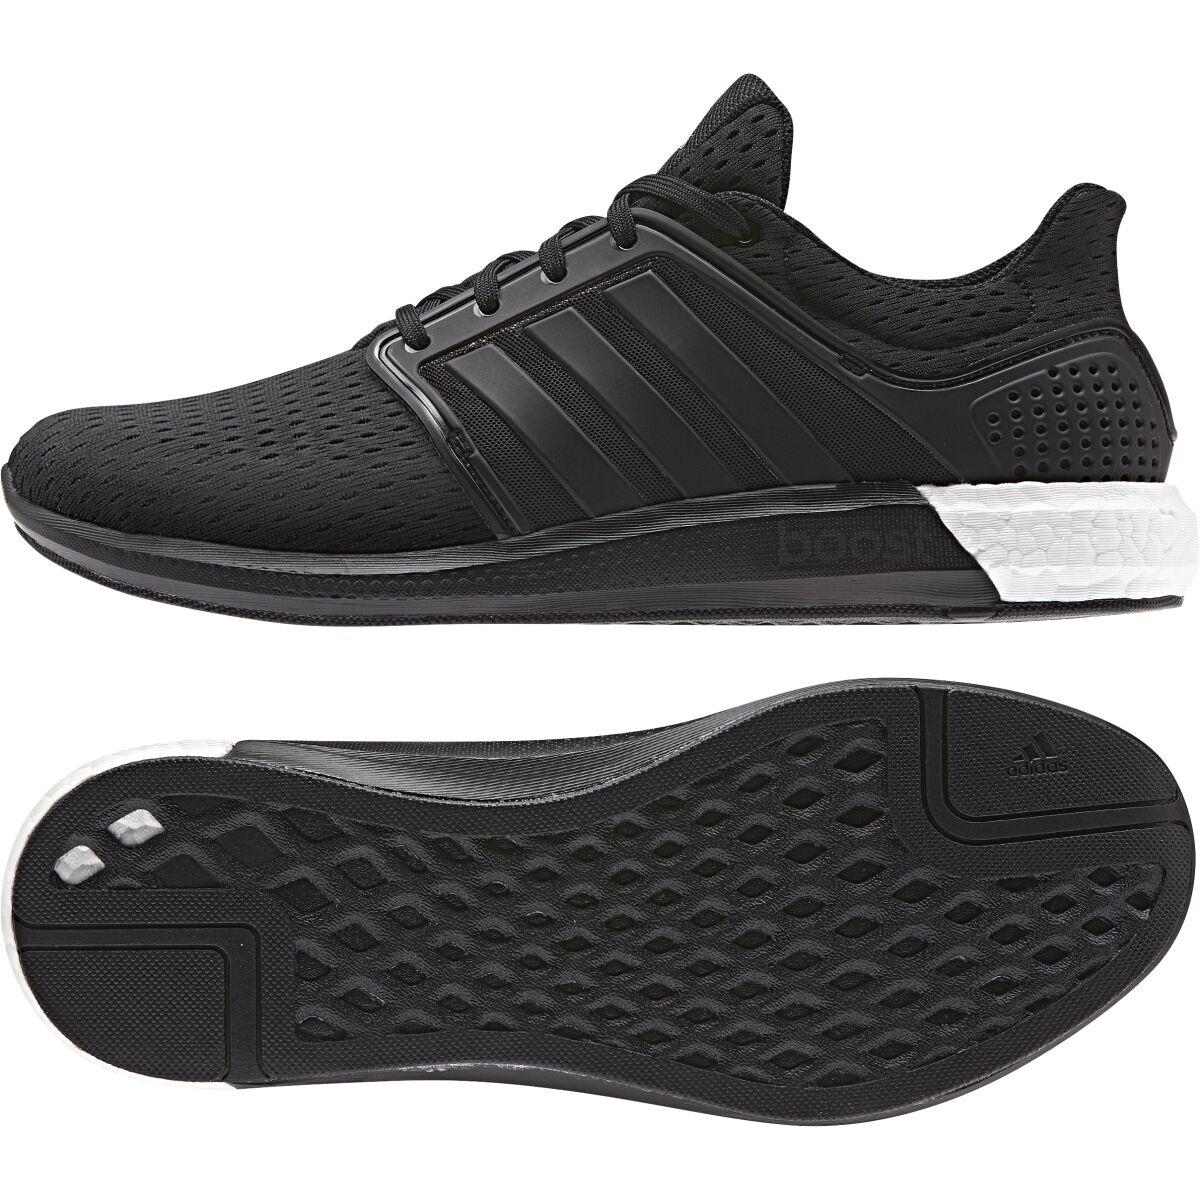 Adidas Solar Boost M Lightweight Running / Athletic D68993 reg$170 - Black / White